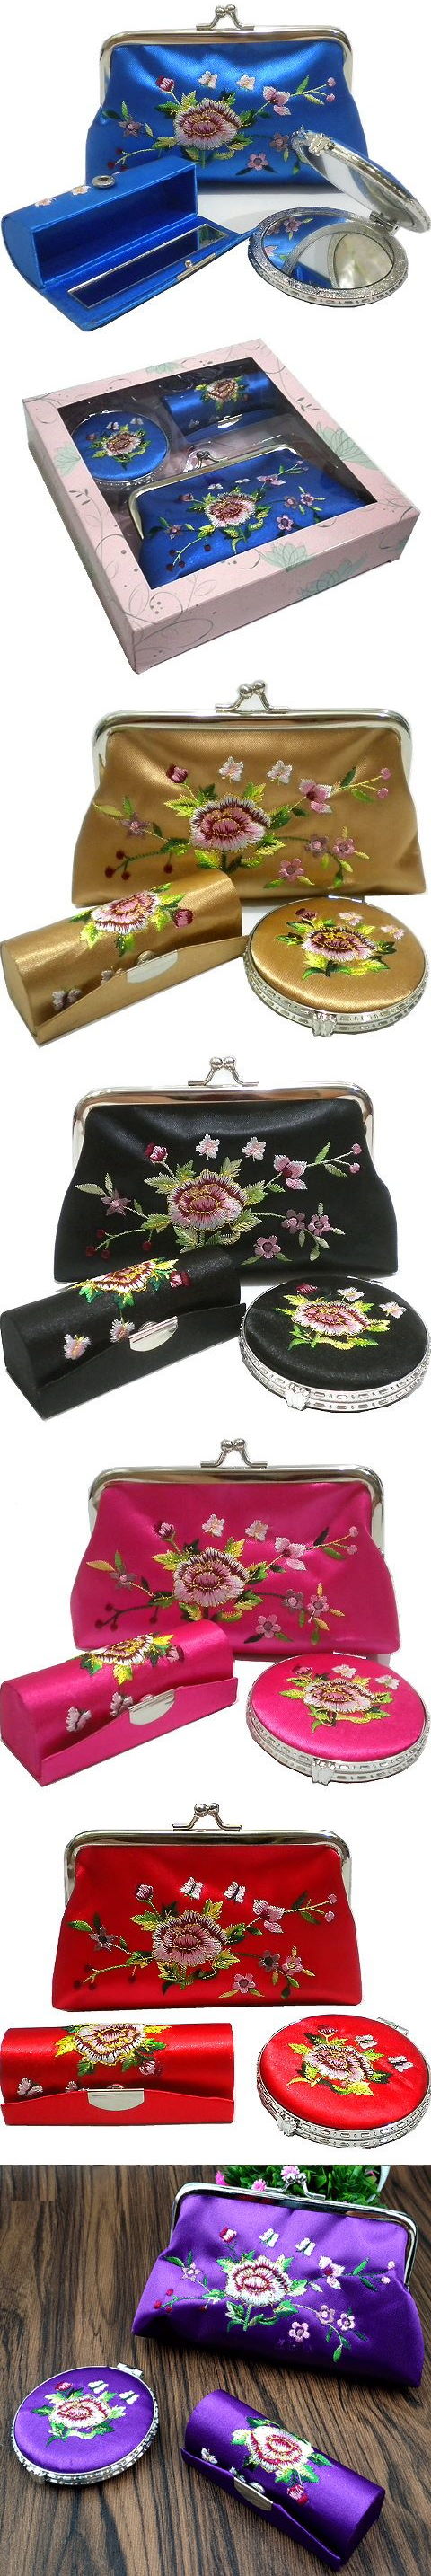 Set of Purse/mini-bag, Lipstick-case & Compact-mirror